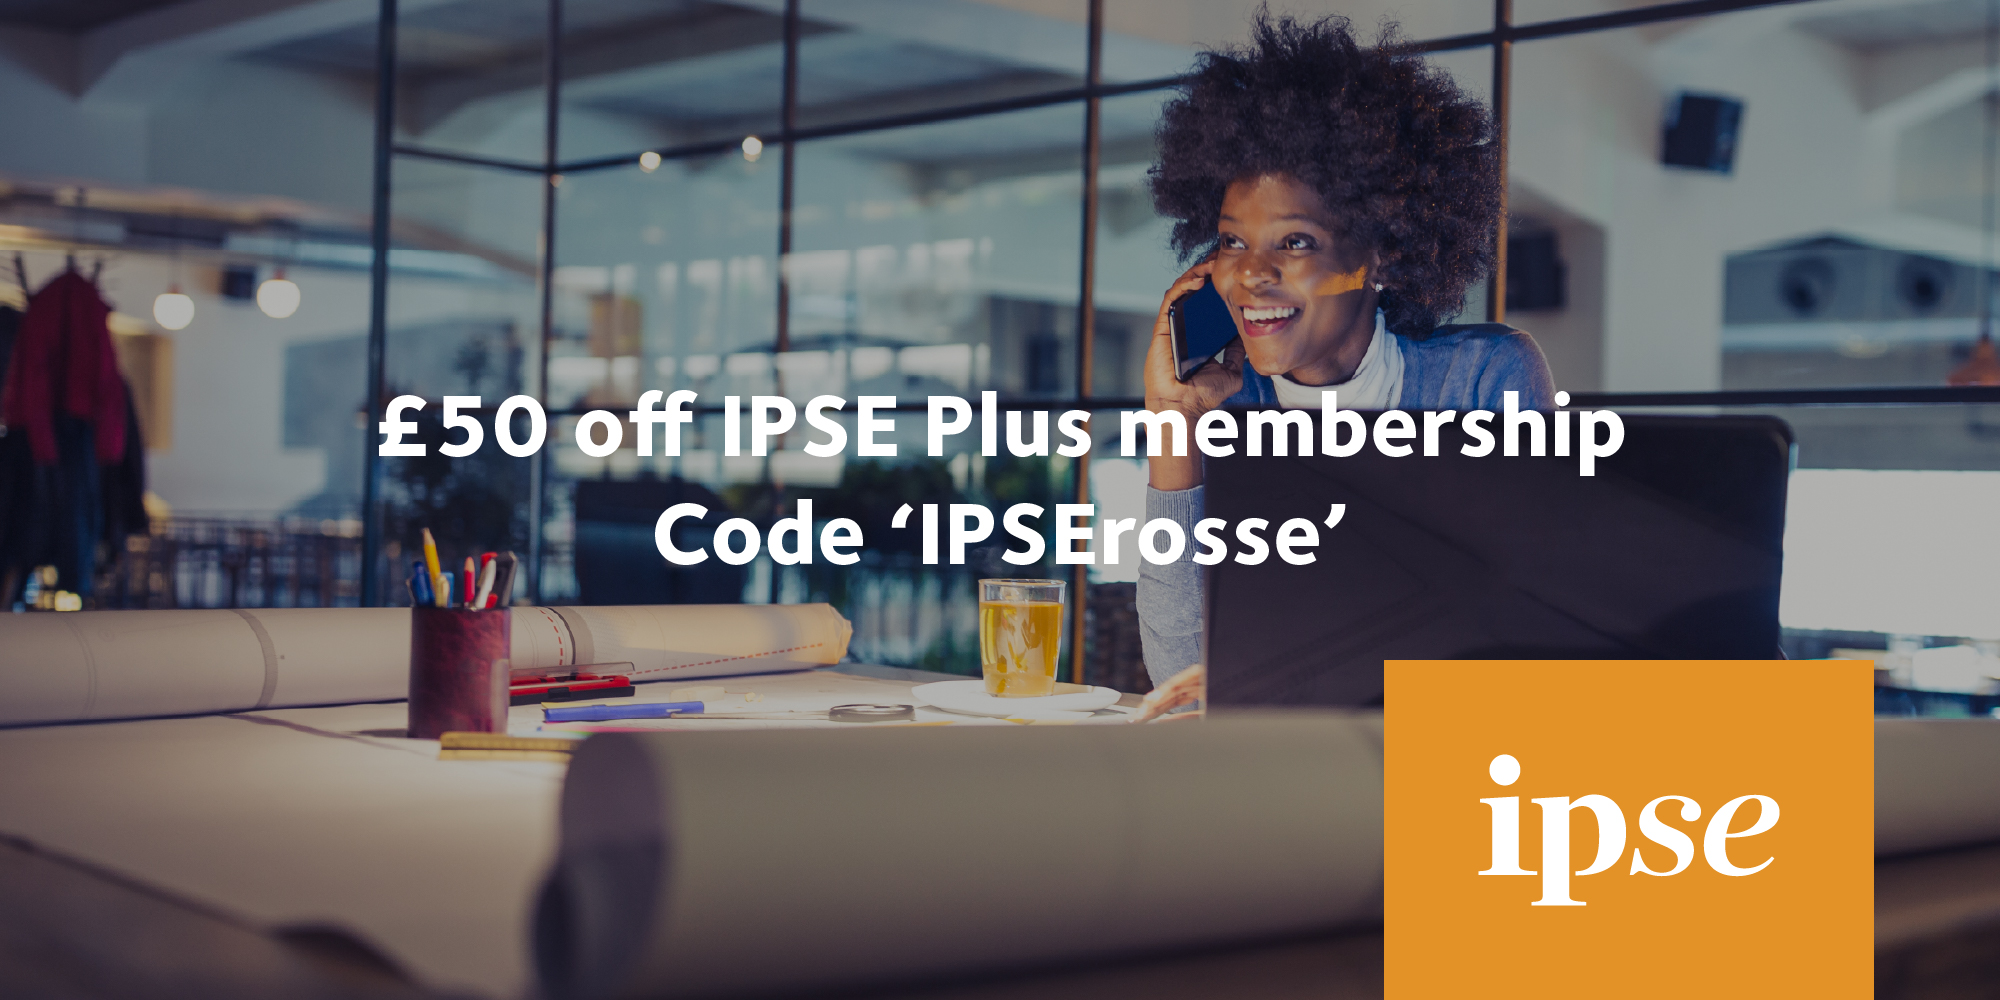 Ipserosse Membership Code